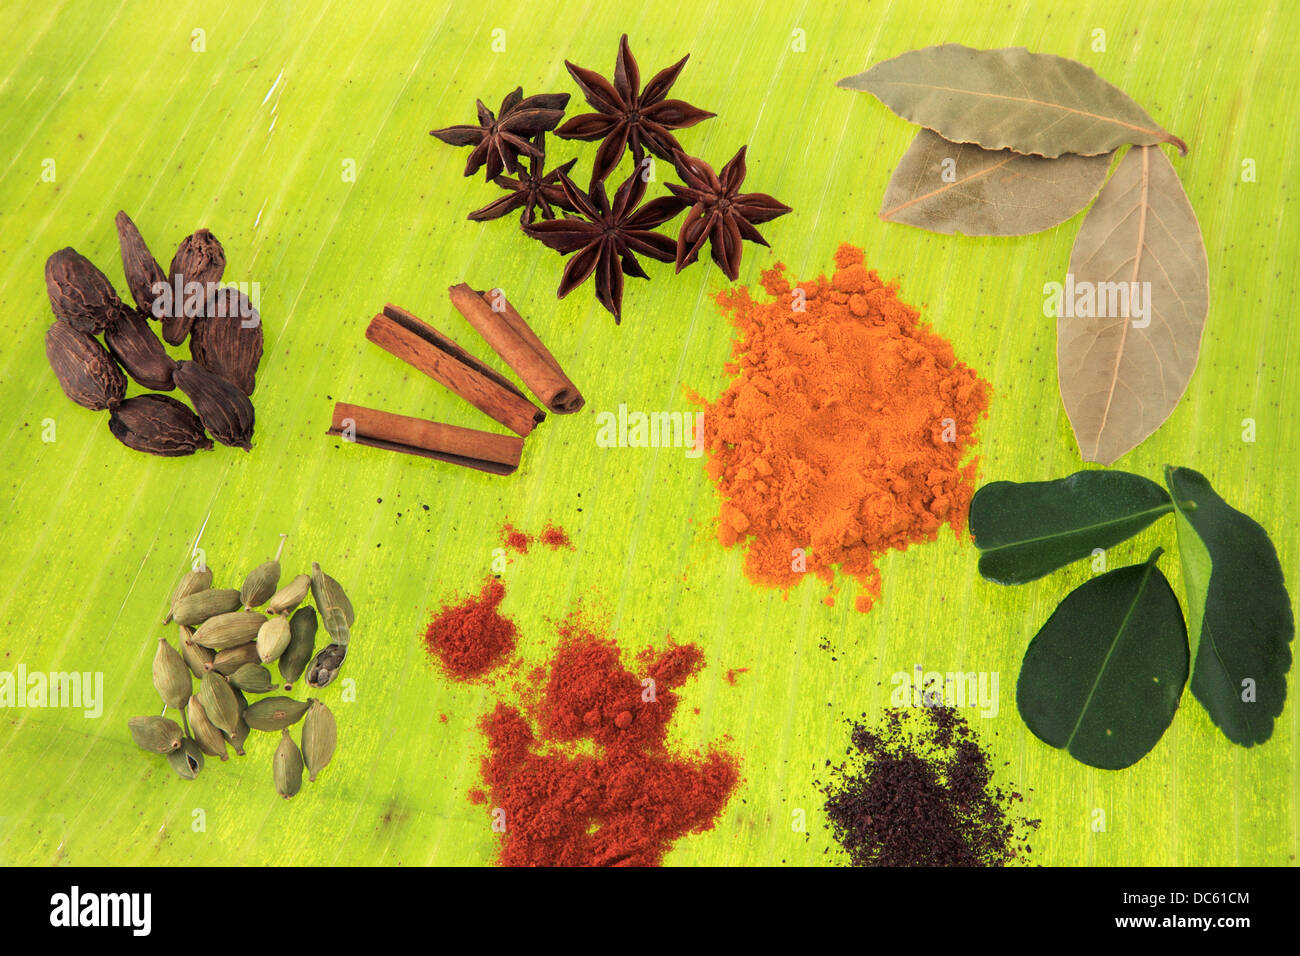 Spices on a banana leaf Stock Photo